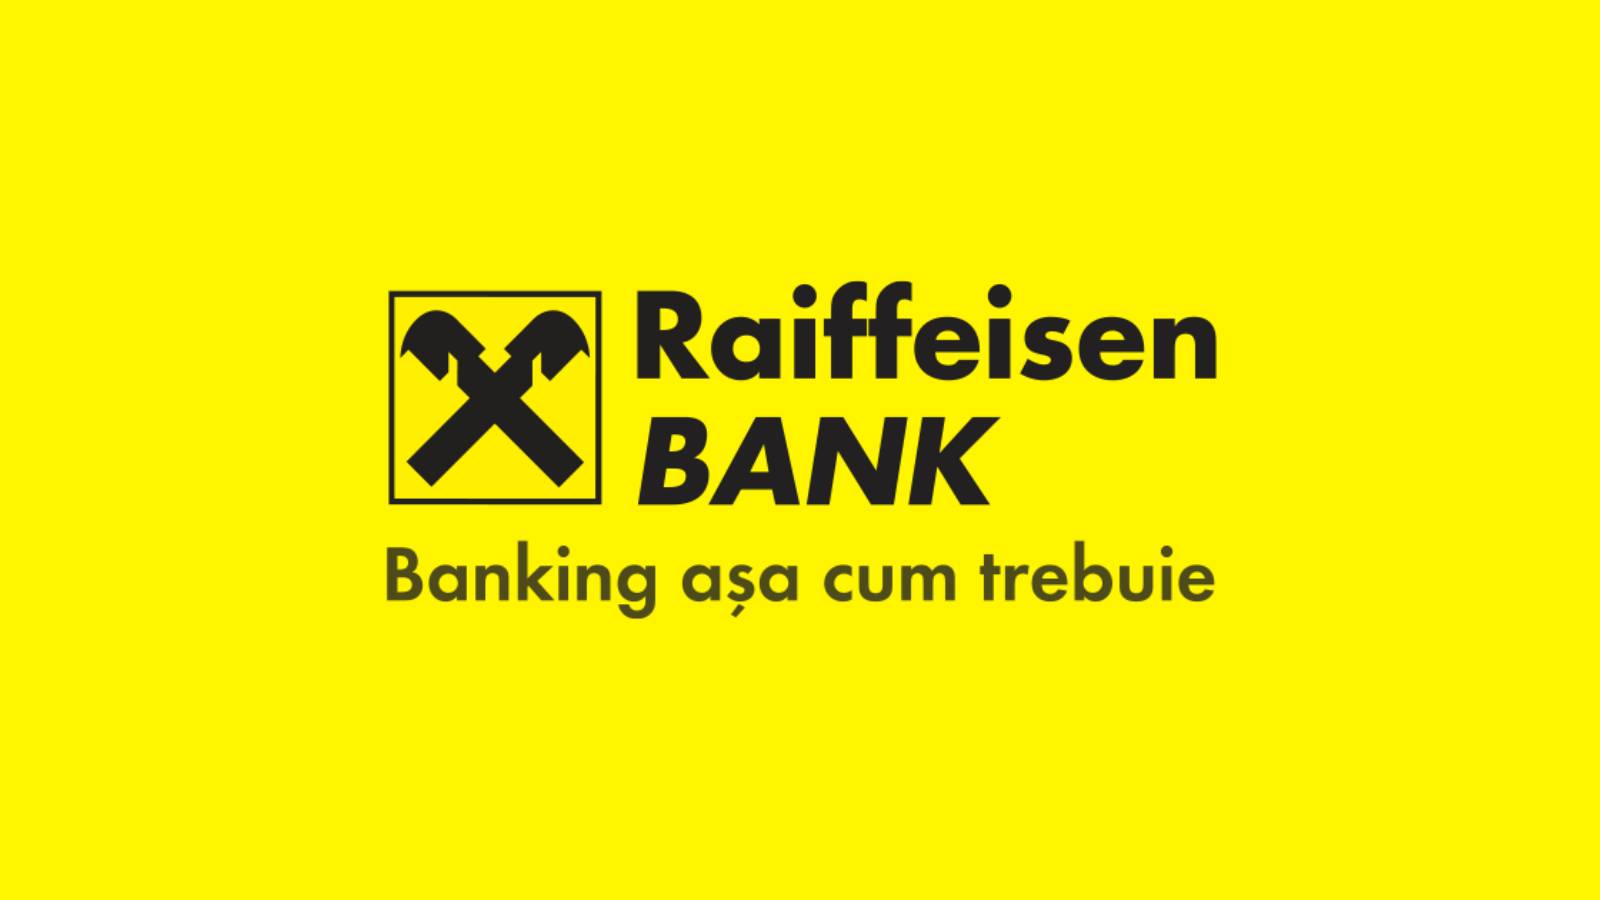 Raiffeisen Bank Anuntul OFICIAL Ofera Gratuit Clientilor Cum pot Profita